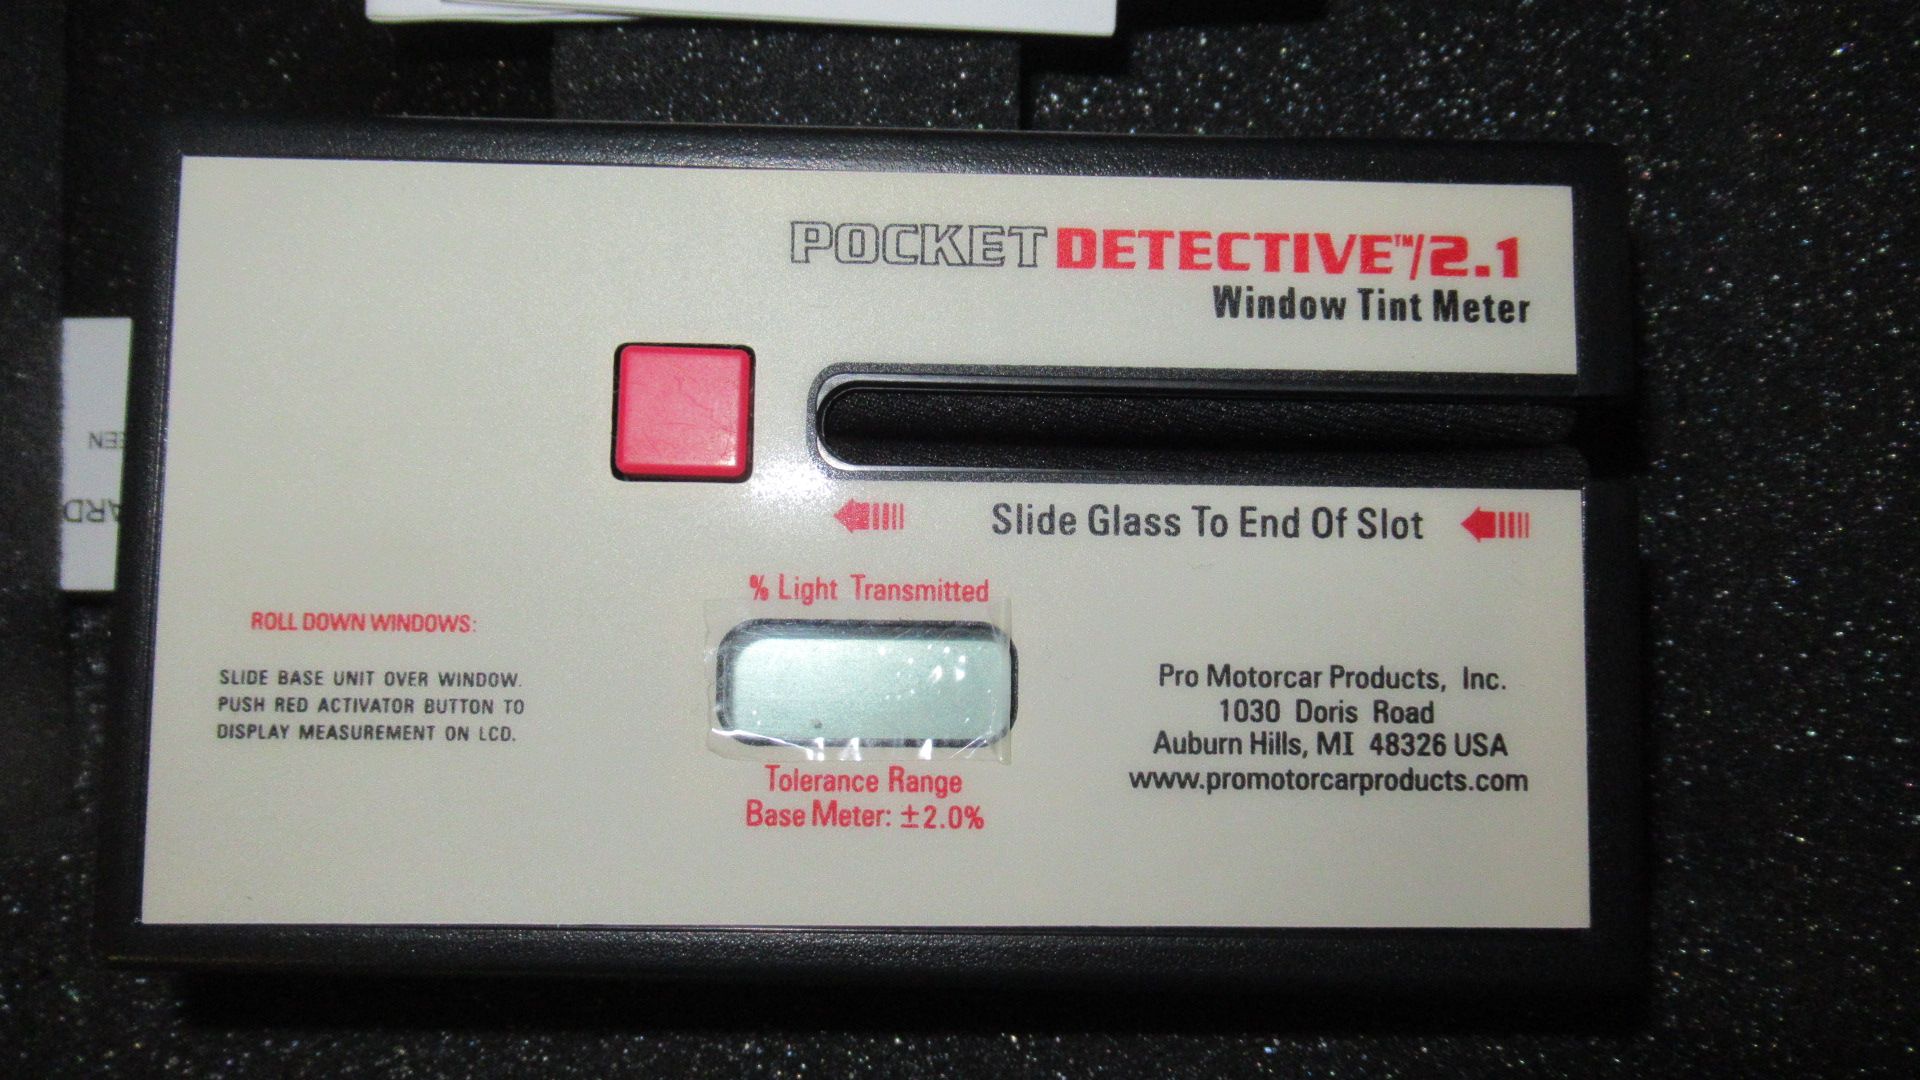 SLIDE ON POCKET DETECTIVE 2.1 WINDOW PMC-801-0 - Image 2 of 2